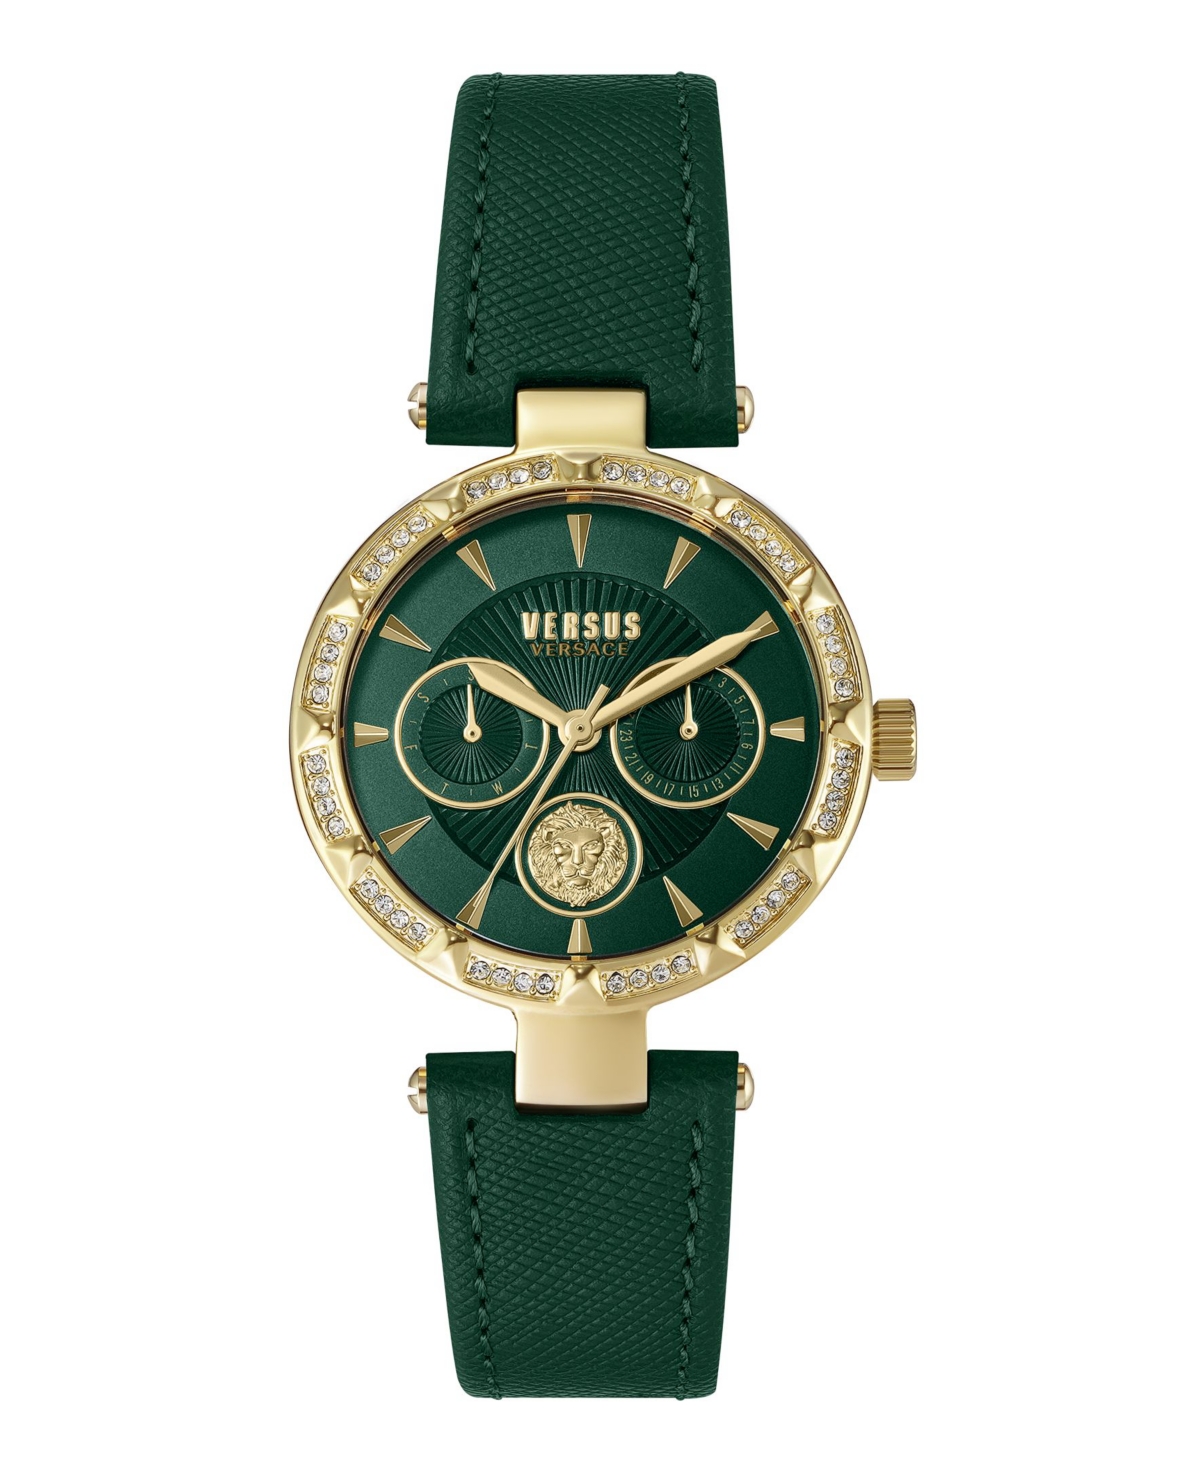 Versus by Versace Women's Sertie Green Leather Strap Watch 36mm - Gold